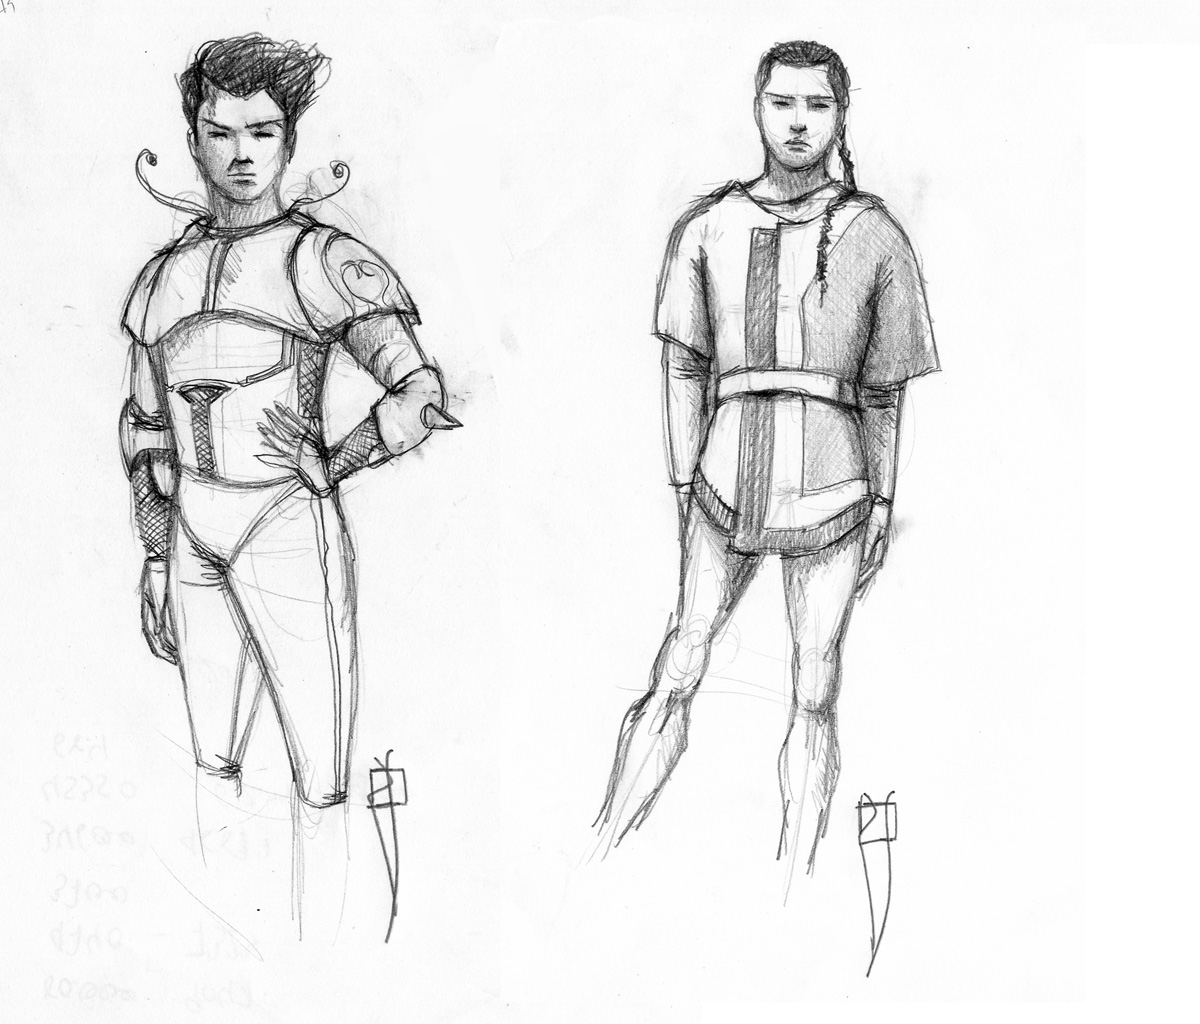 men's sketches